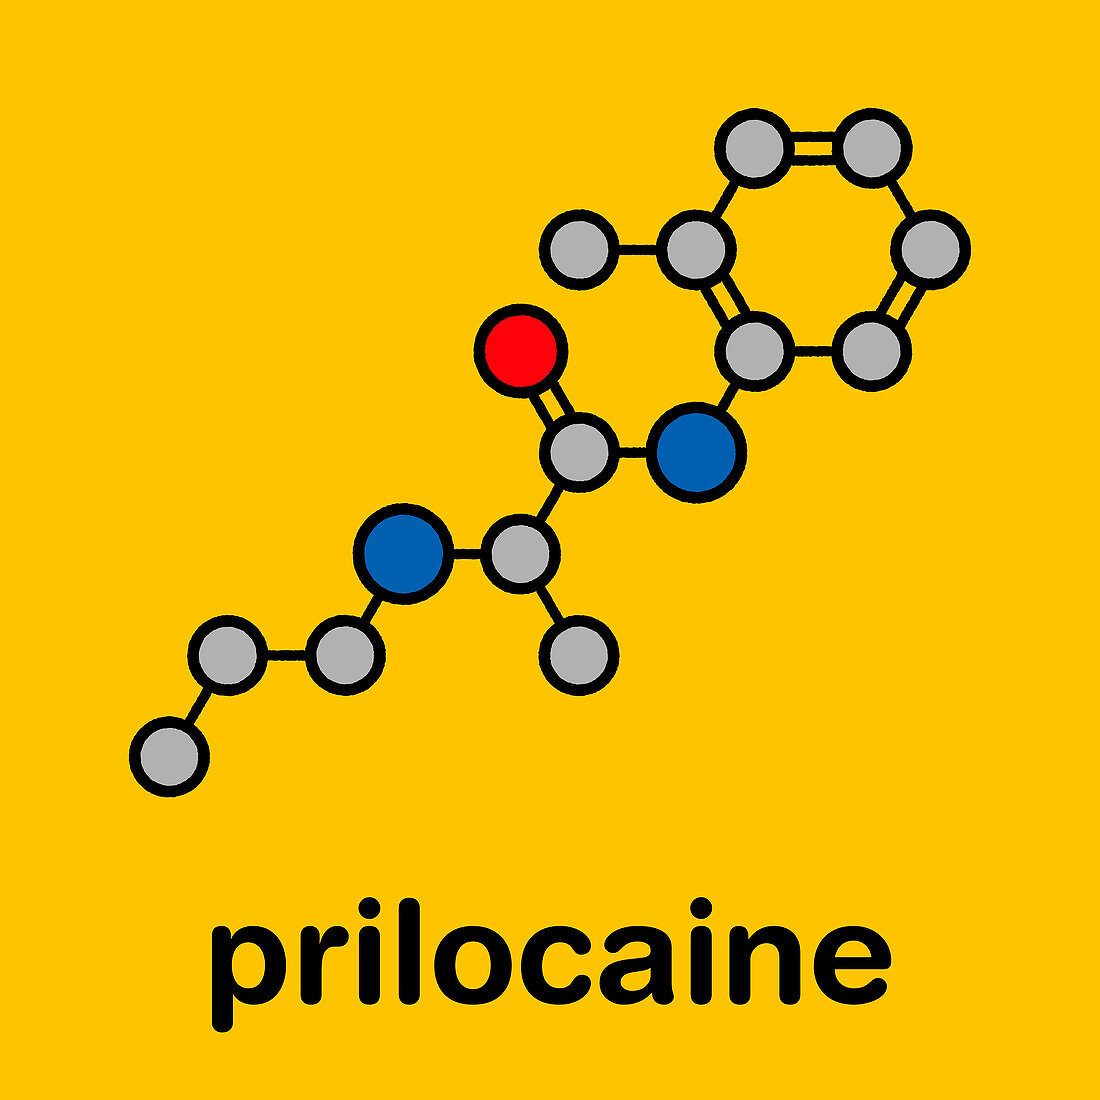 Prilocaine local anesthetic drug, molecular model